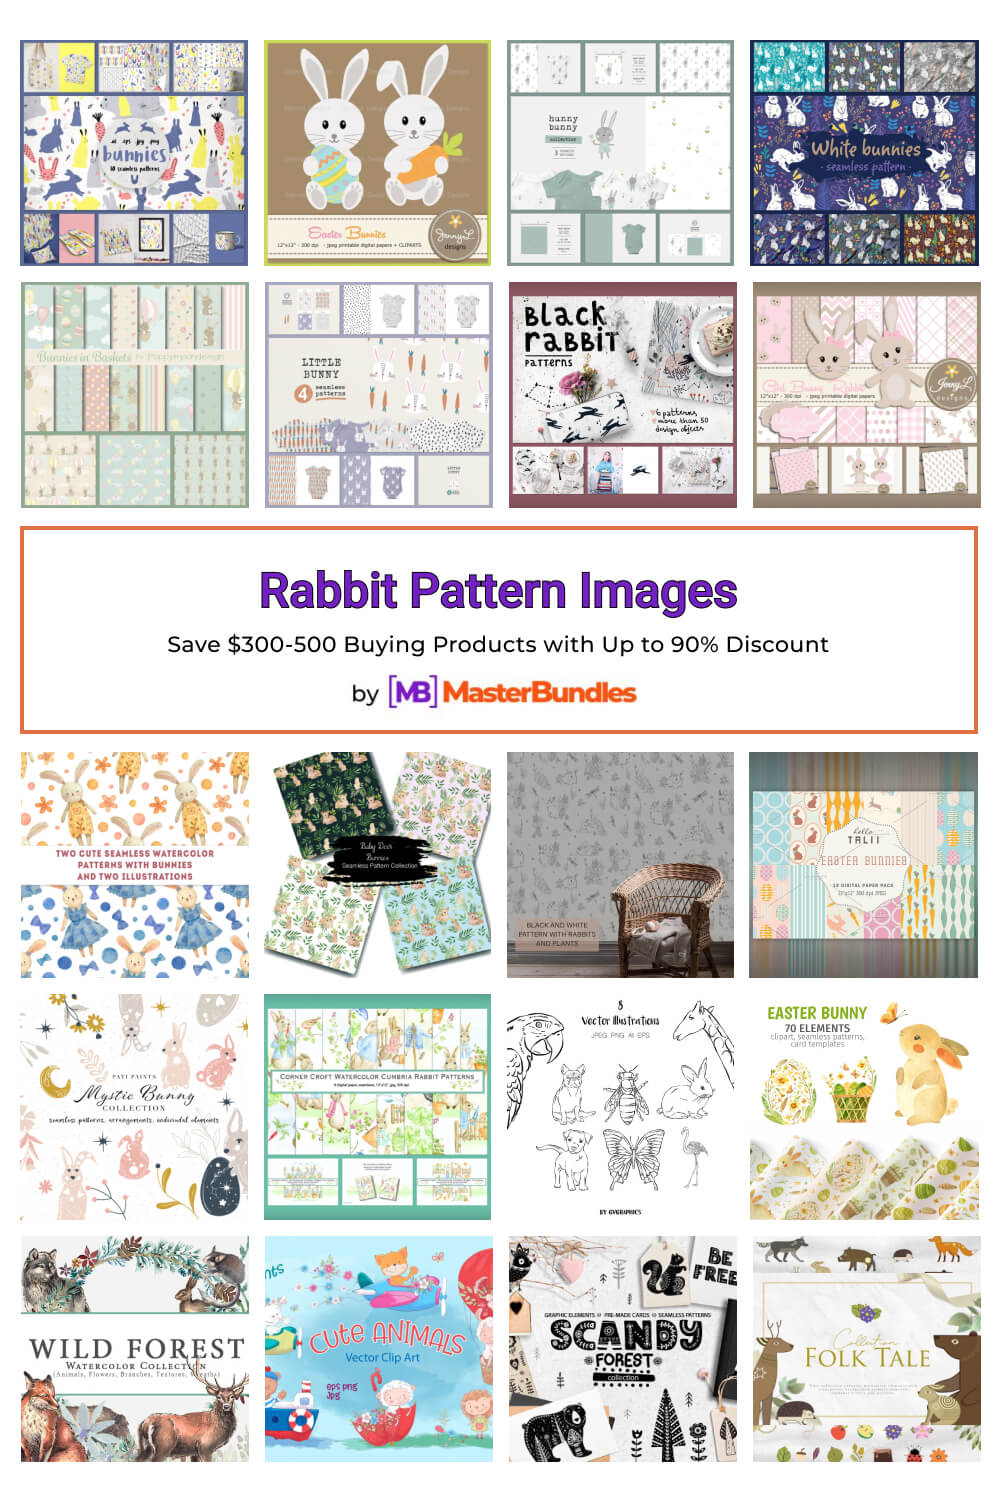 rabbit pattern images pinterest image.